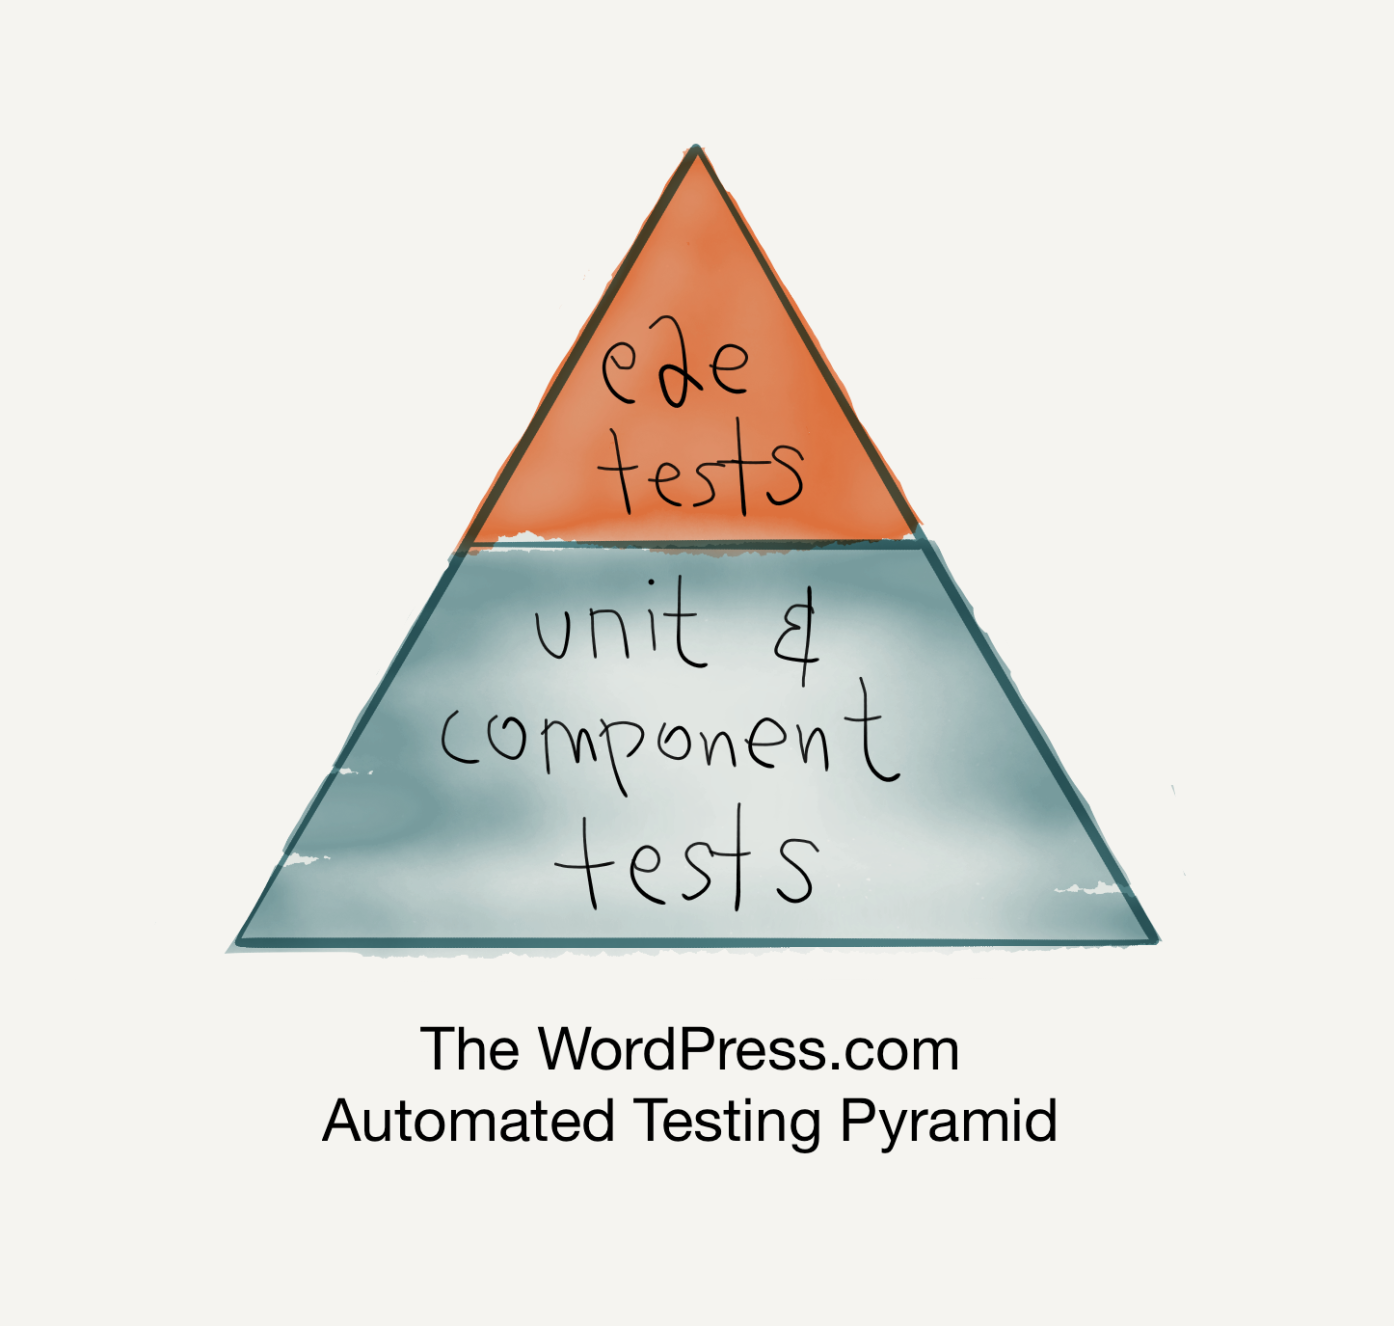 wordpress-com-automated-testing-pyramid (1)